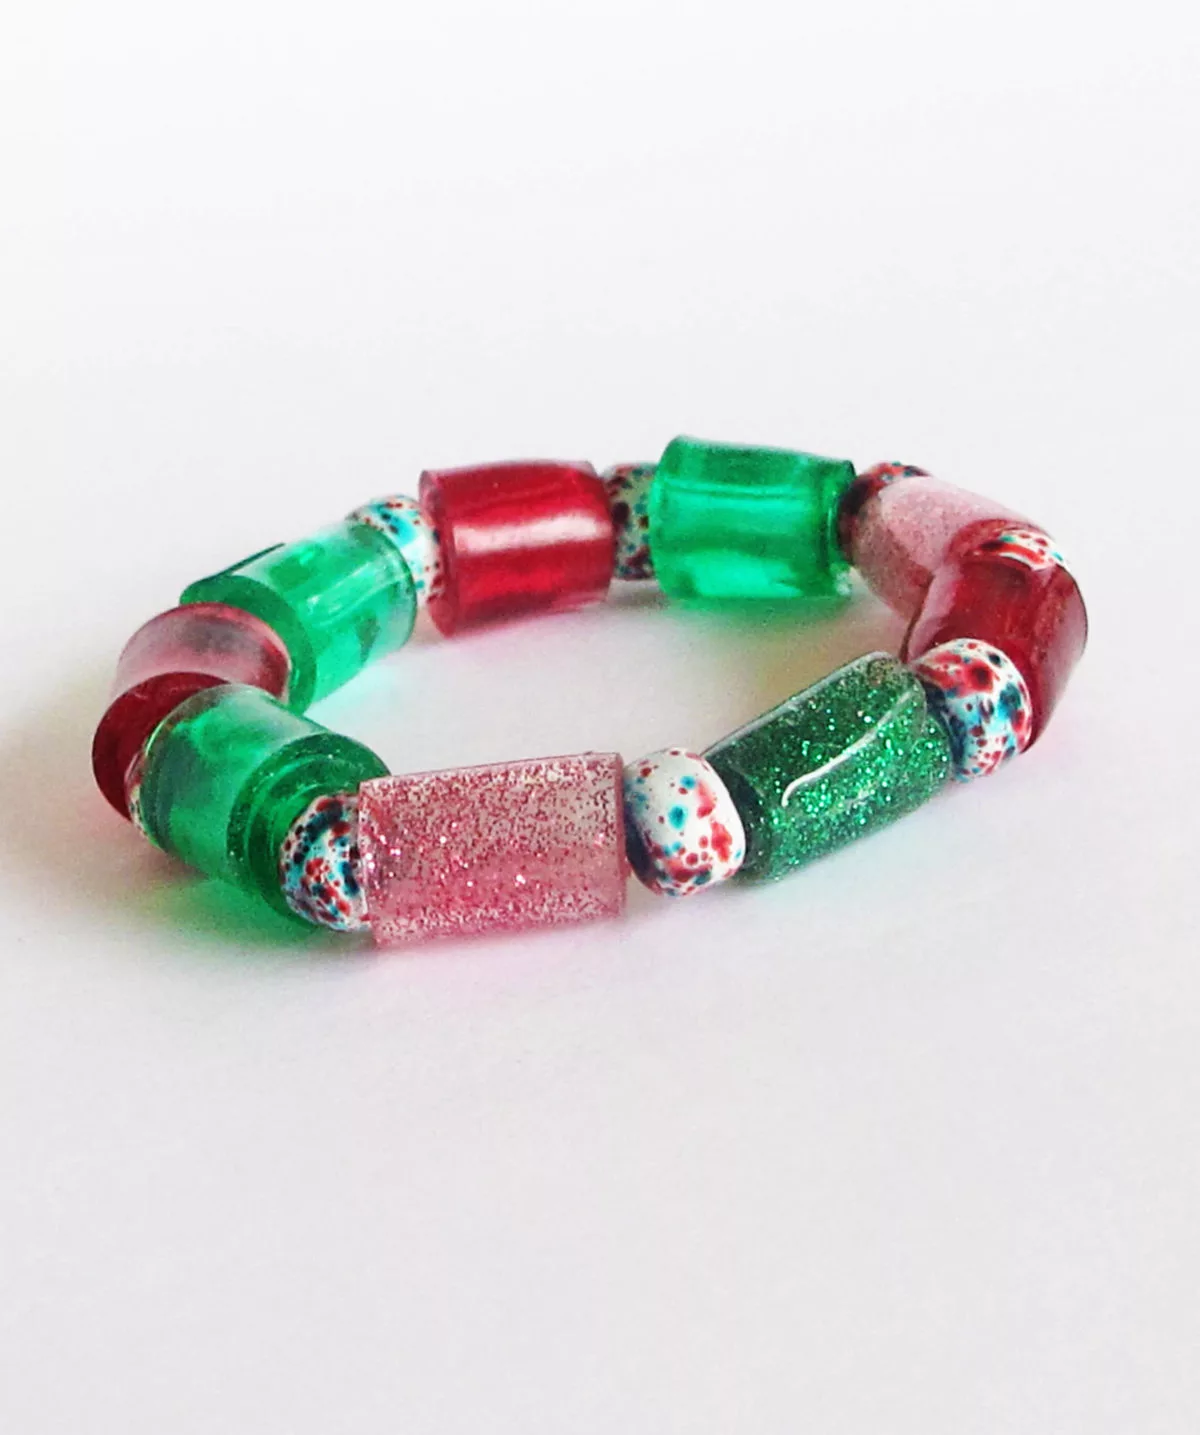 finished resin bead bracelet